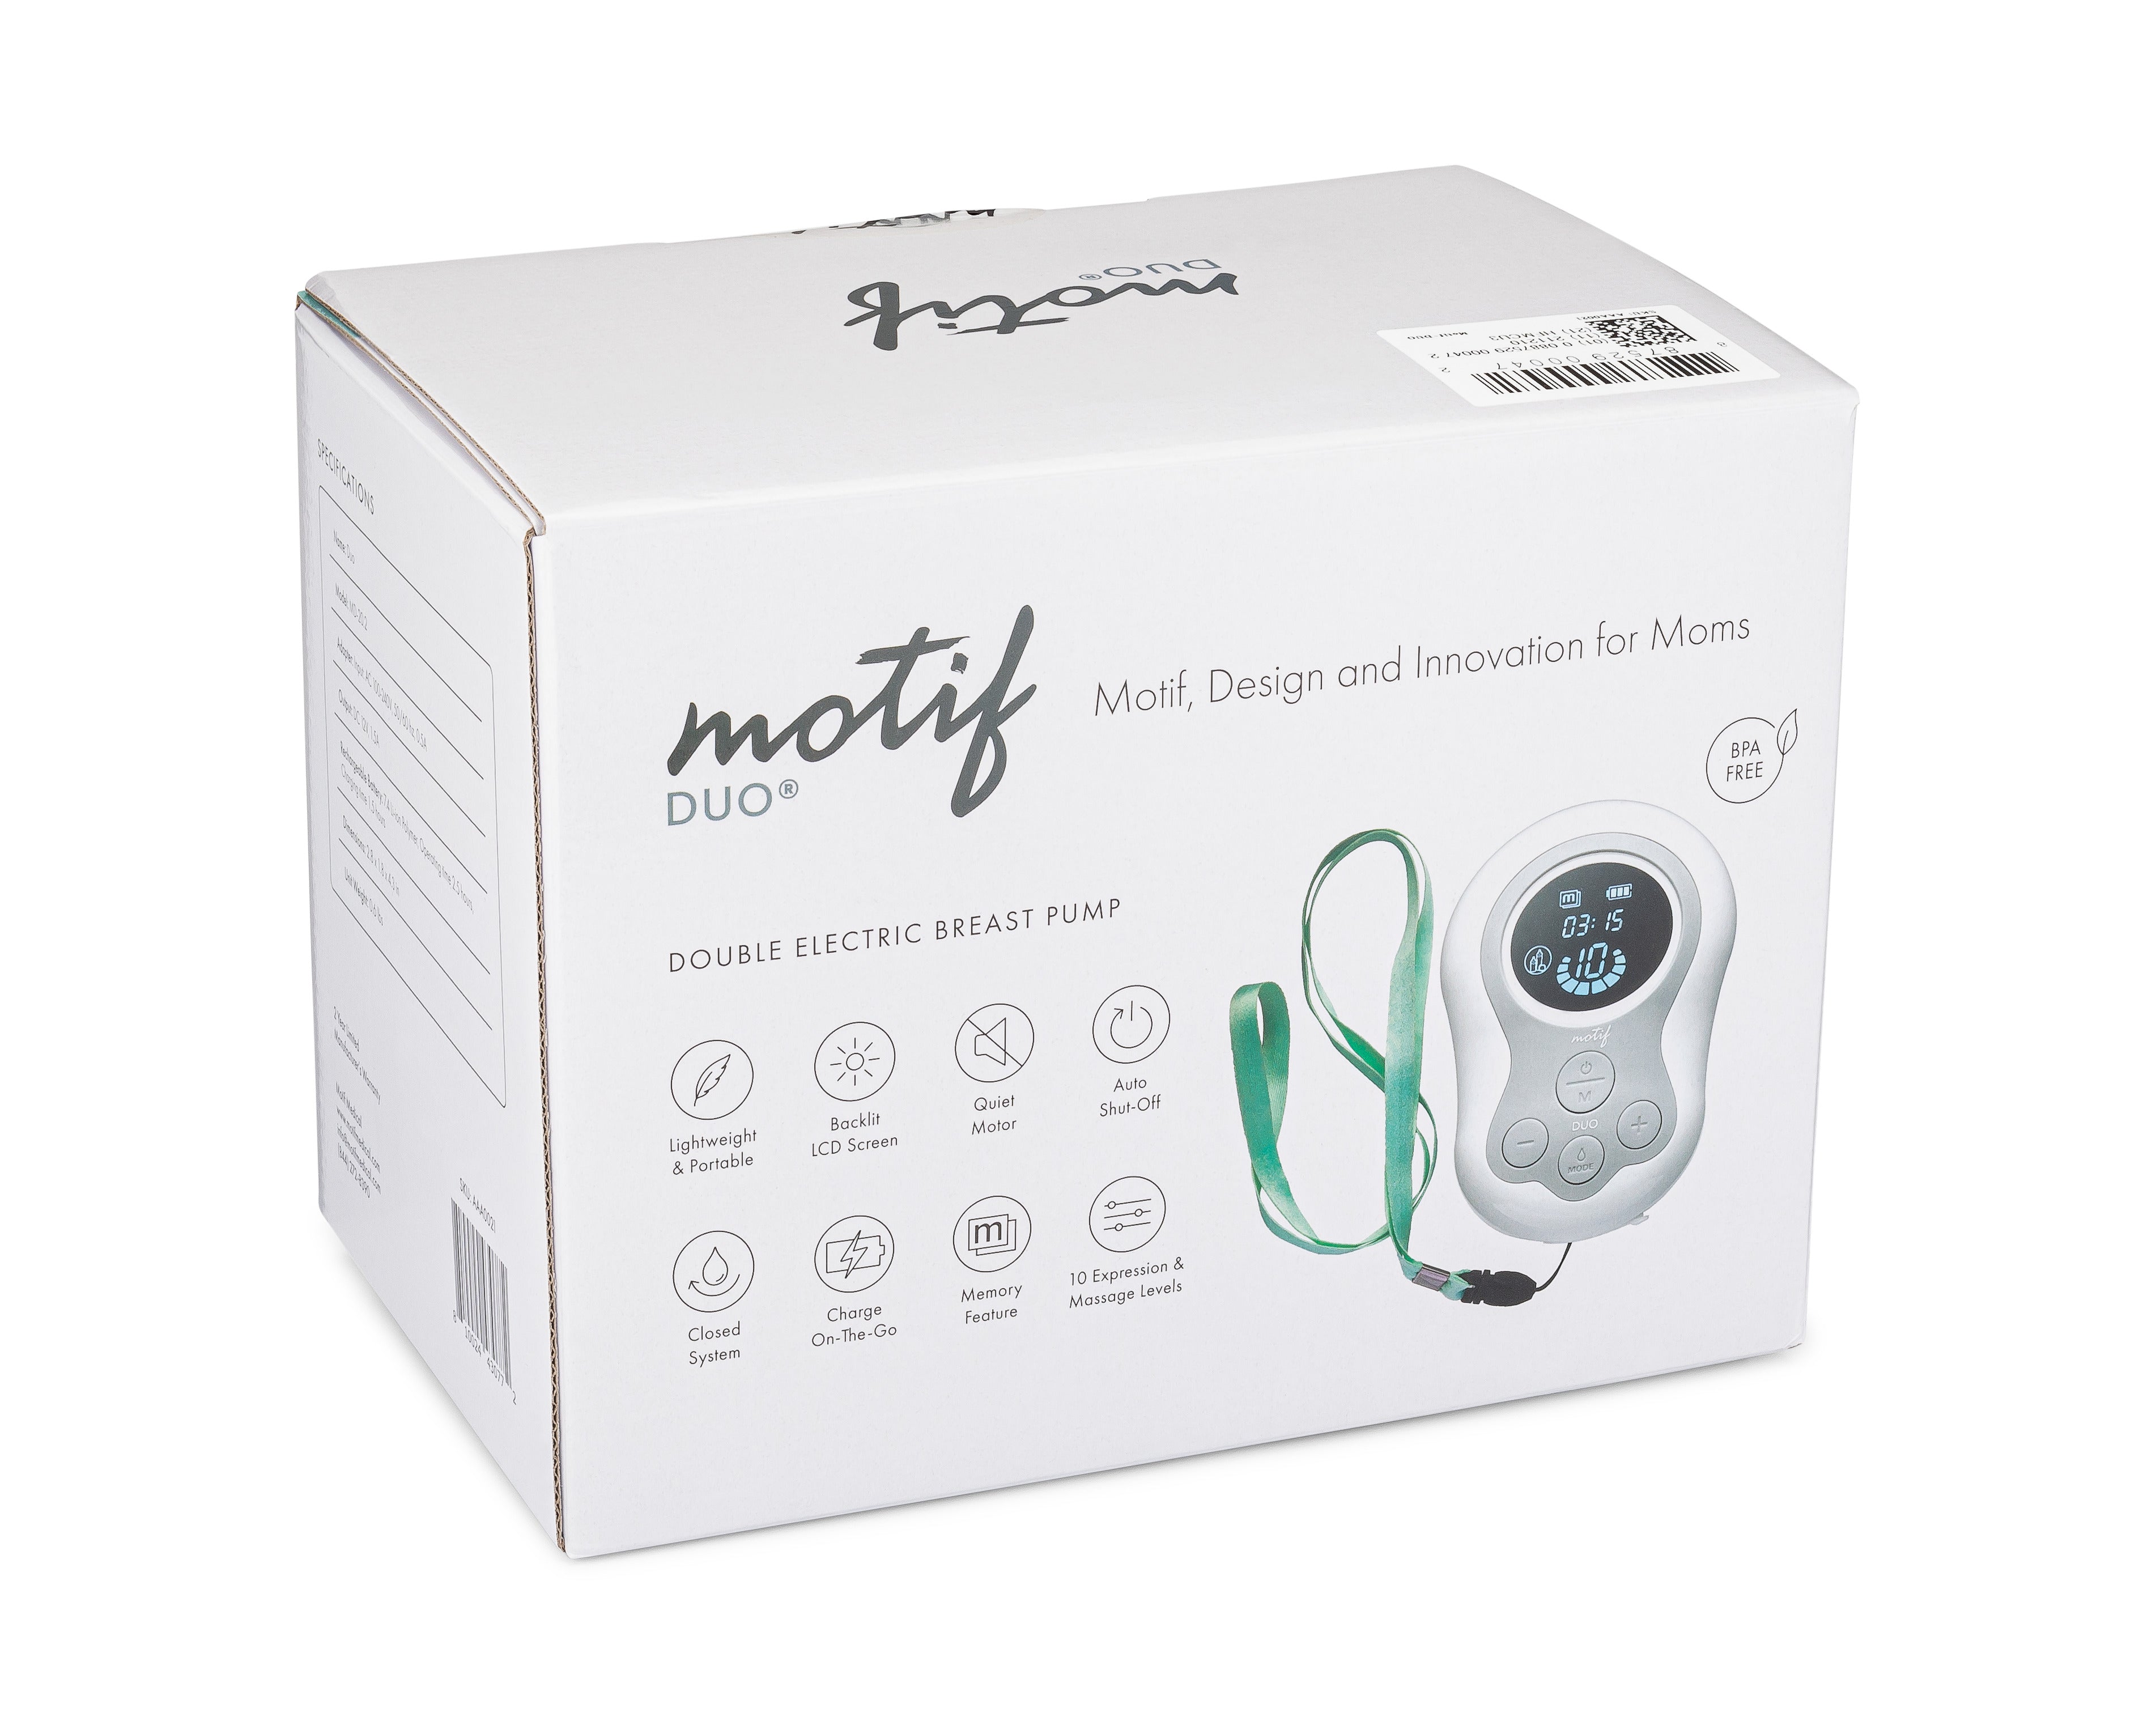 Motif Medical Duo Double Electric Breast Pump box facing forward 